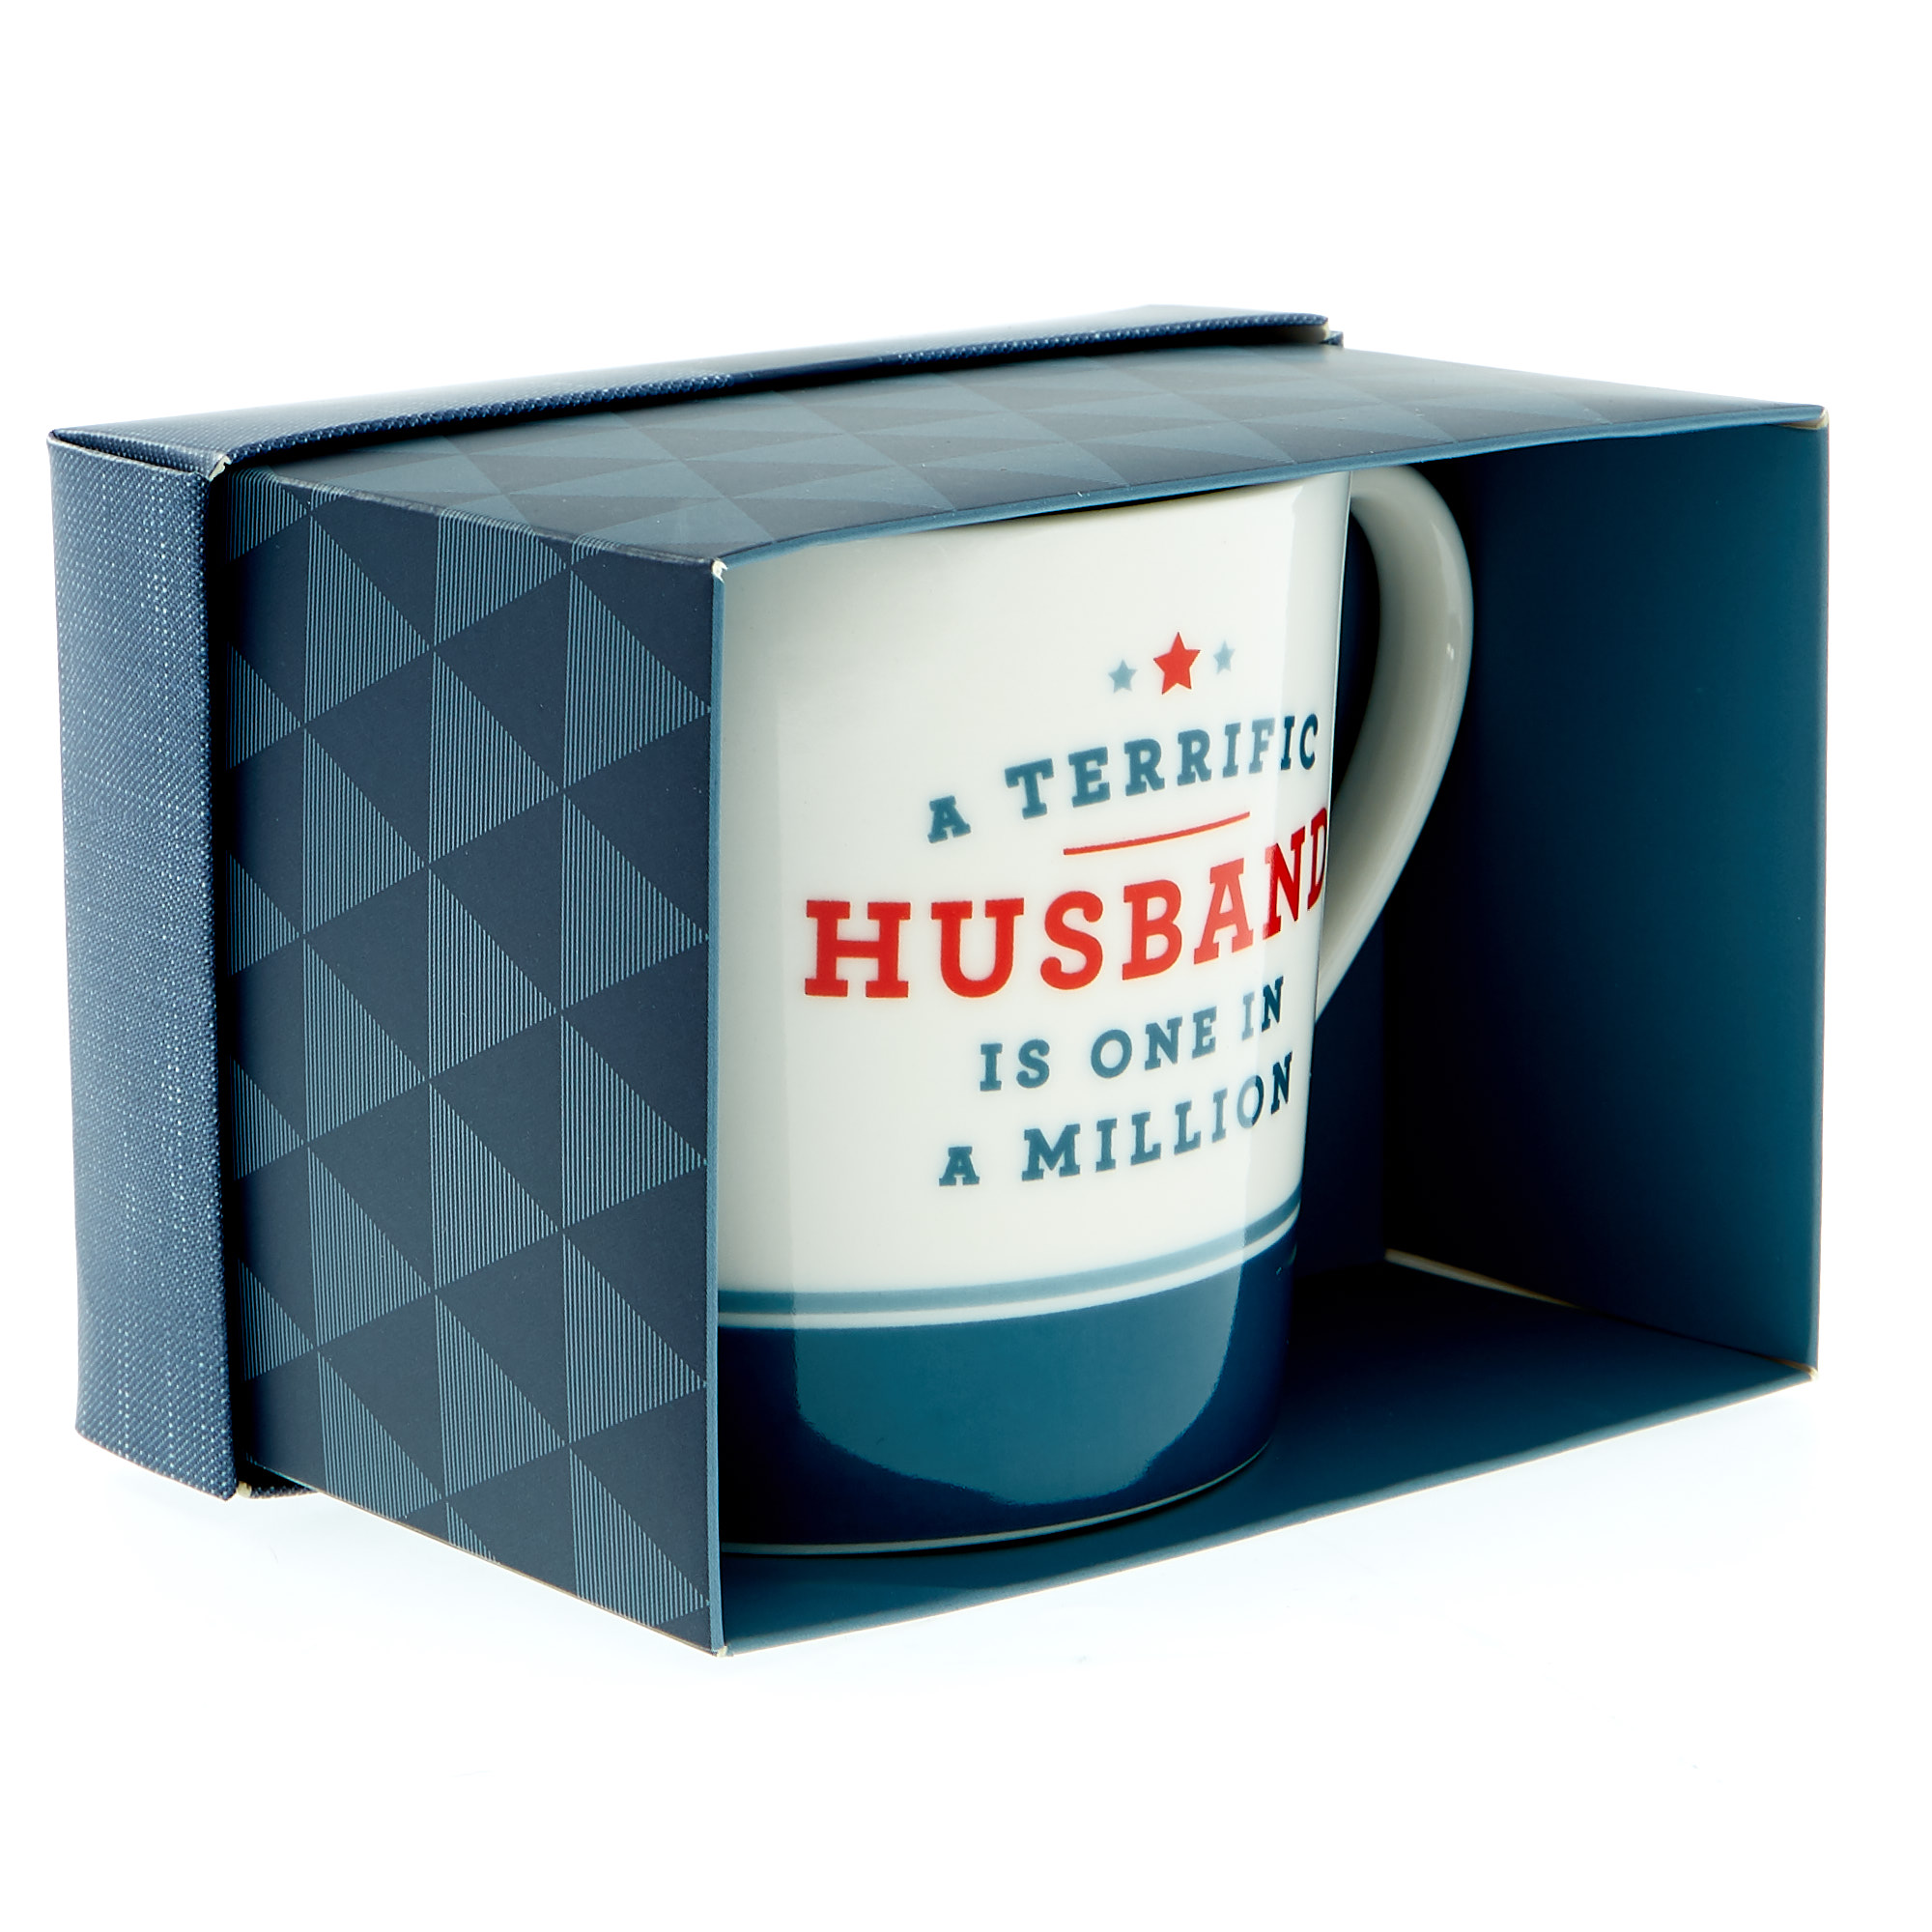 A Terrific Husband Mug